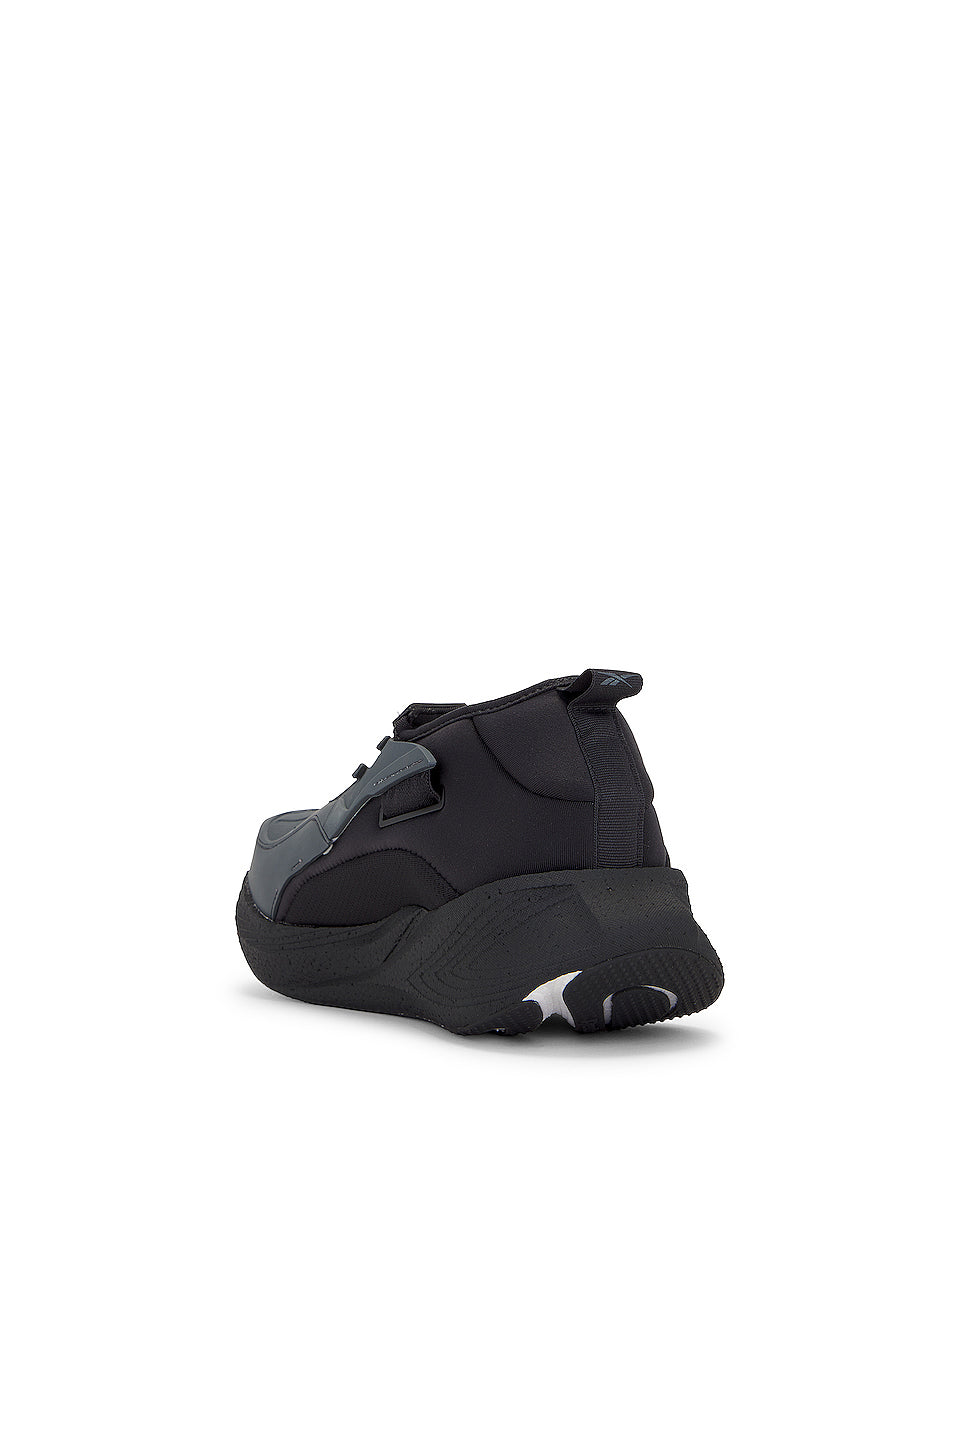 X Ngg Floatride Sneaker In Black & Silver